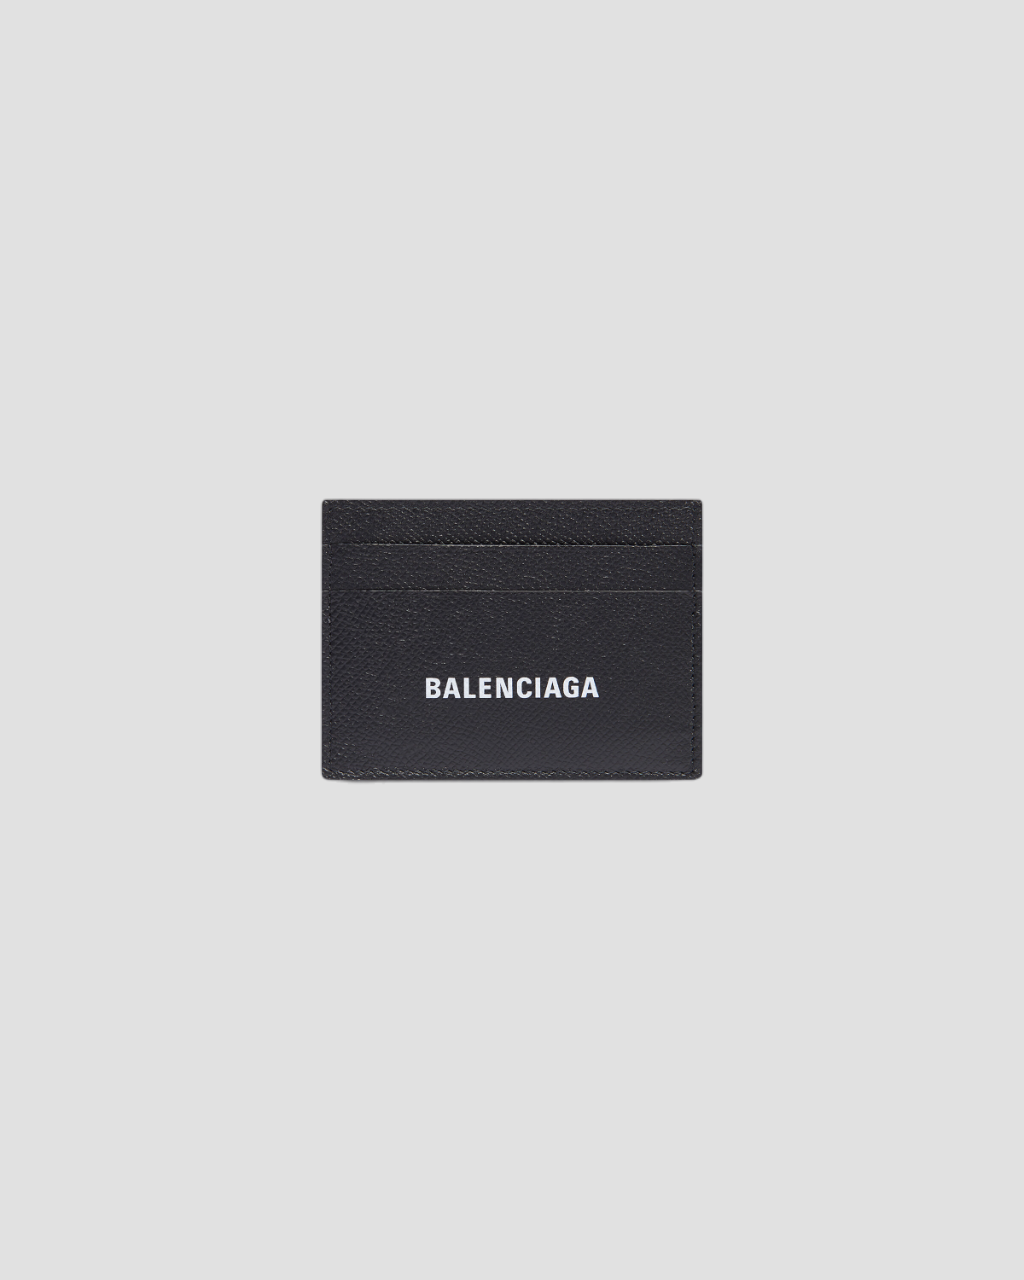 BALENCIAGA CASH CARD HOLDER IN BLACK/WHITE 5943091IZI31090